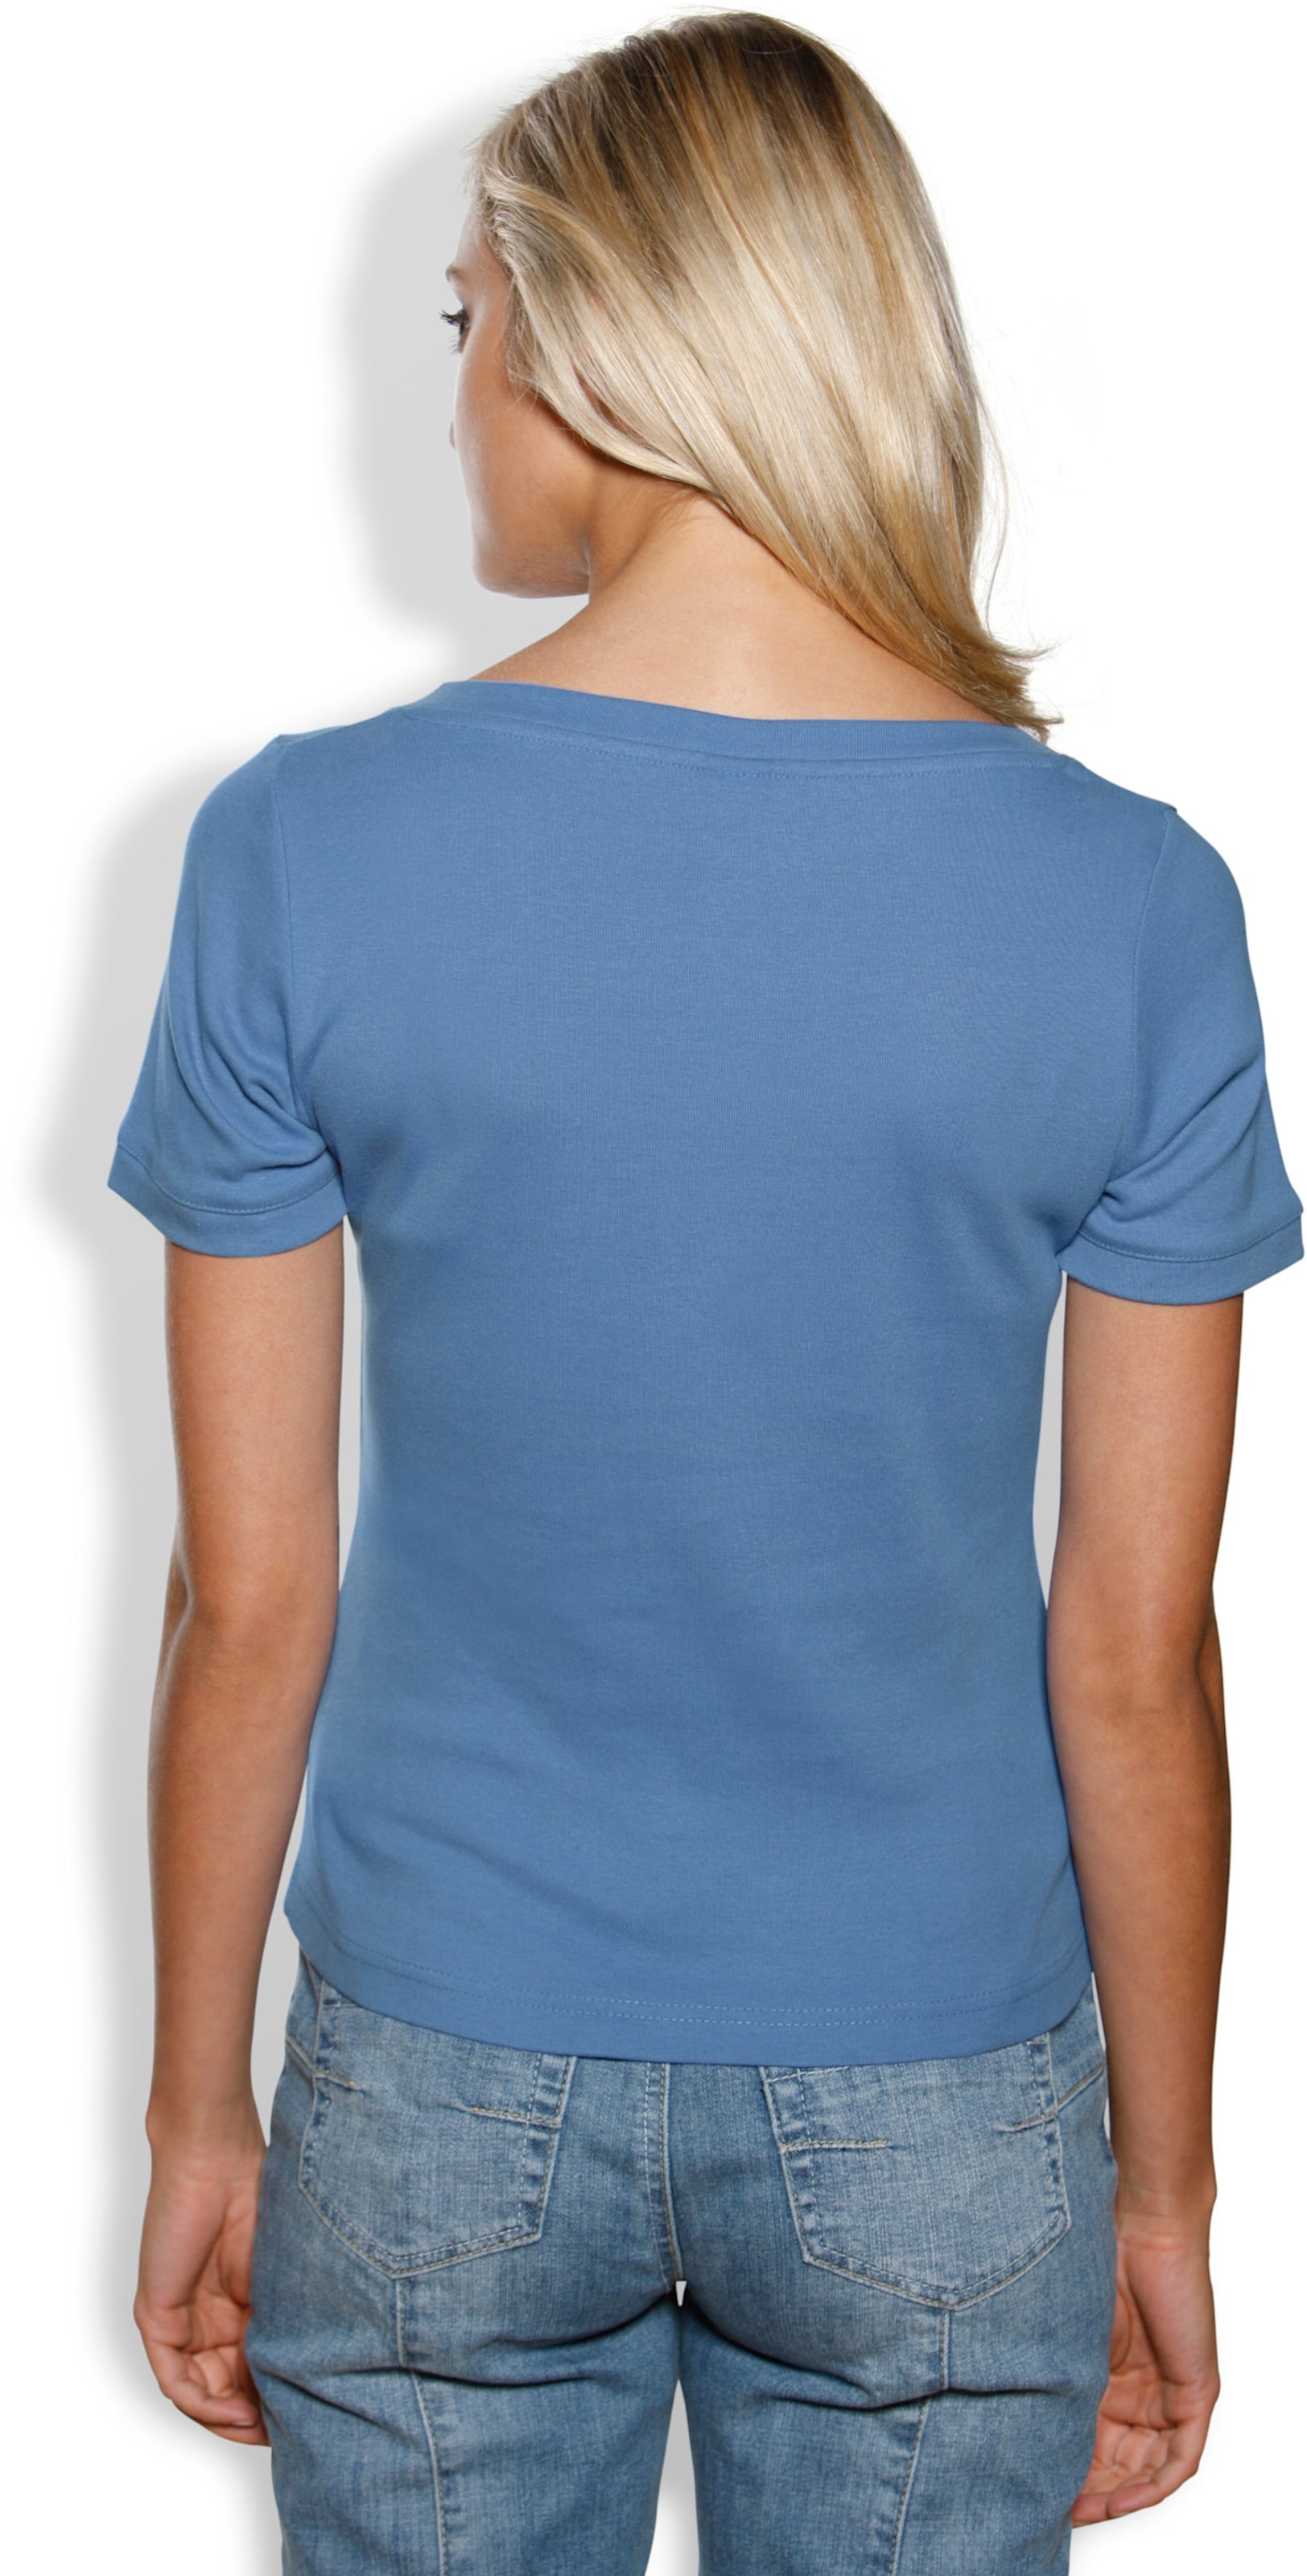 Feiner günstig Kaufen-Carré-Shirt in azurblau von heine. Carré-Shirt in azurblau von heine <![CDATA[Carré-Shirt Mit großzügigem Ausschnitt. Aus trageangenehmer, feiner Rippenware. Figurbetonte Form.]]>. 